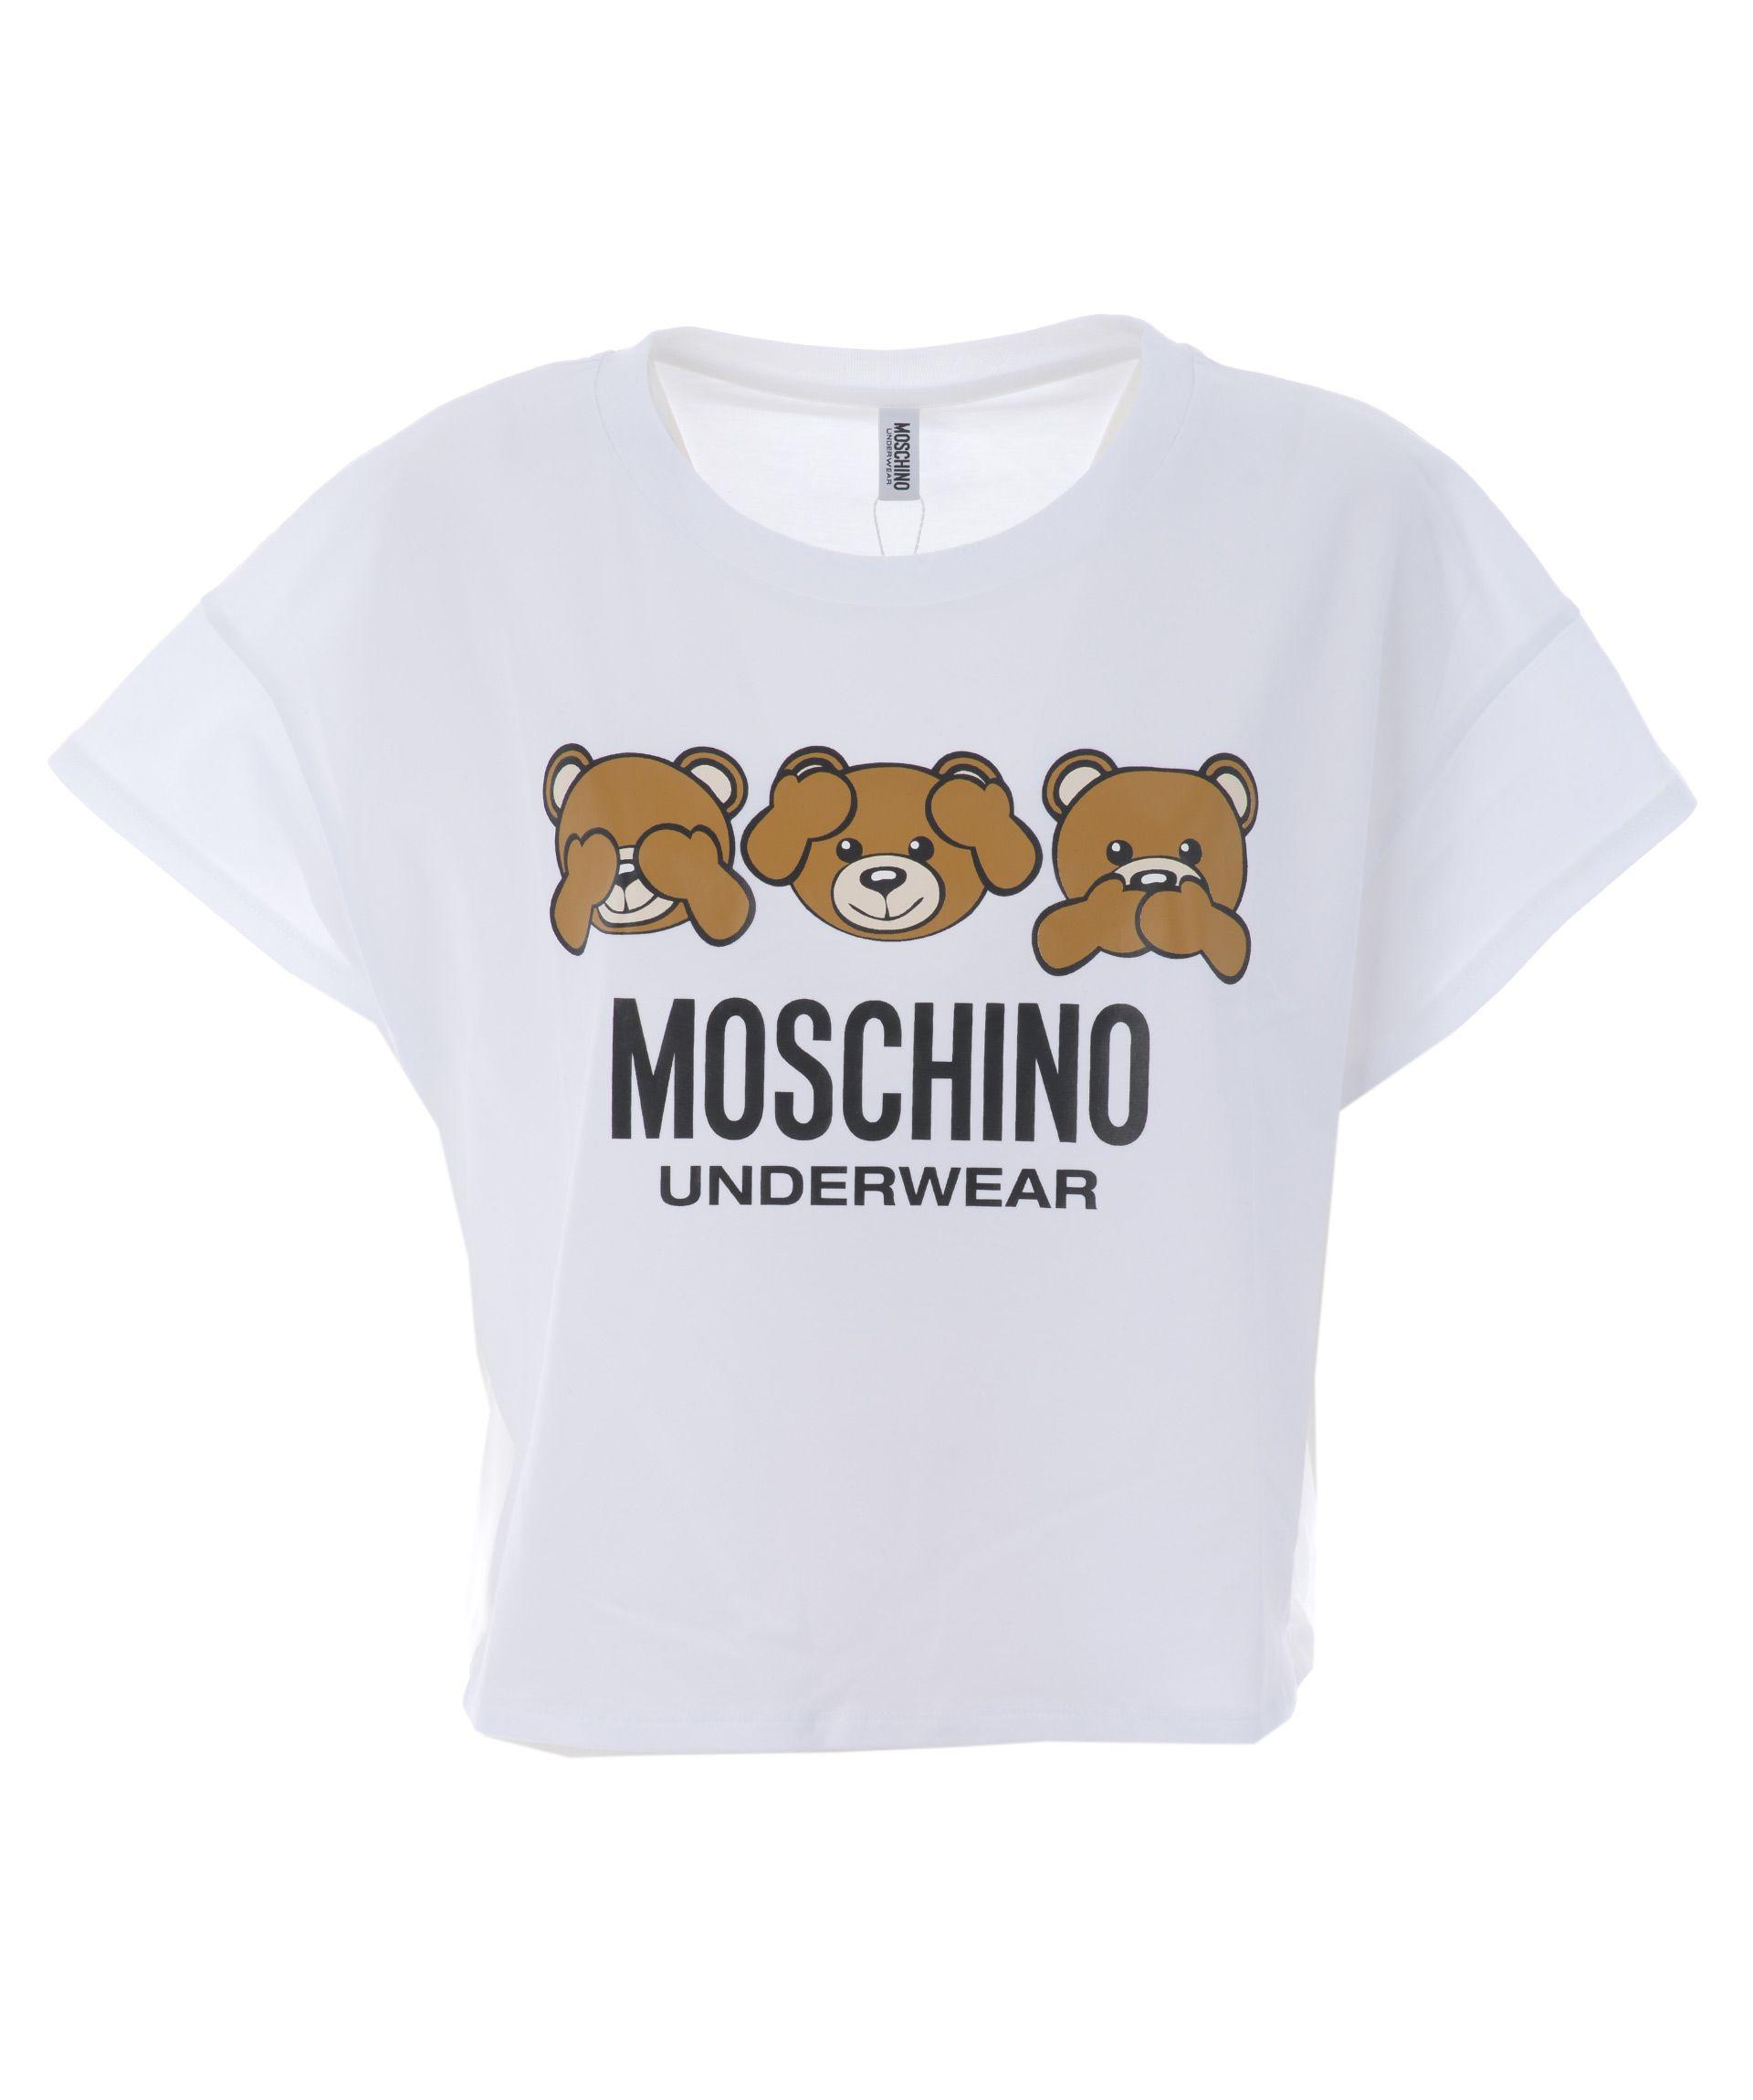 moschino t-shirt underwear bear